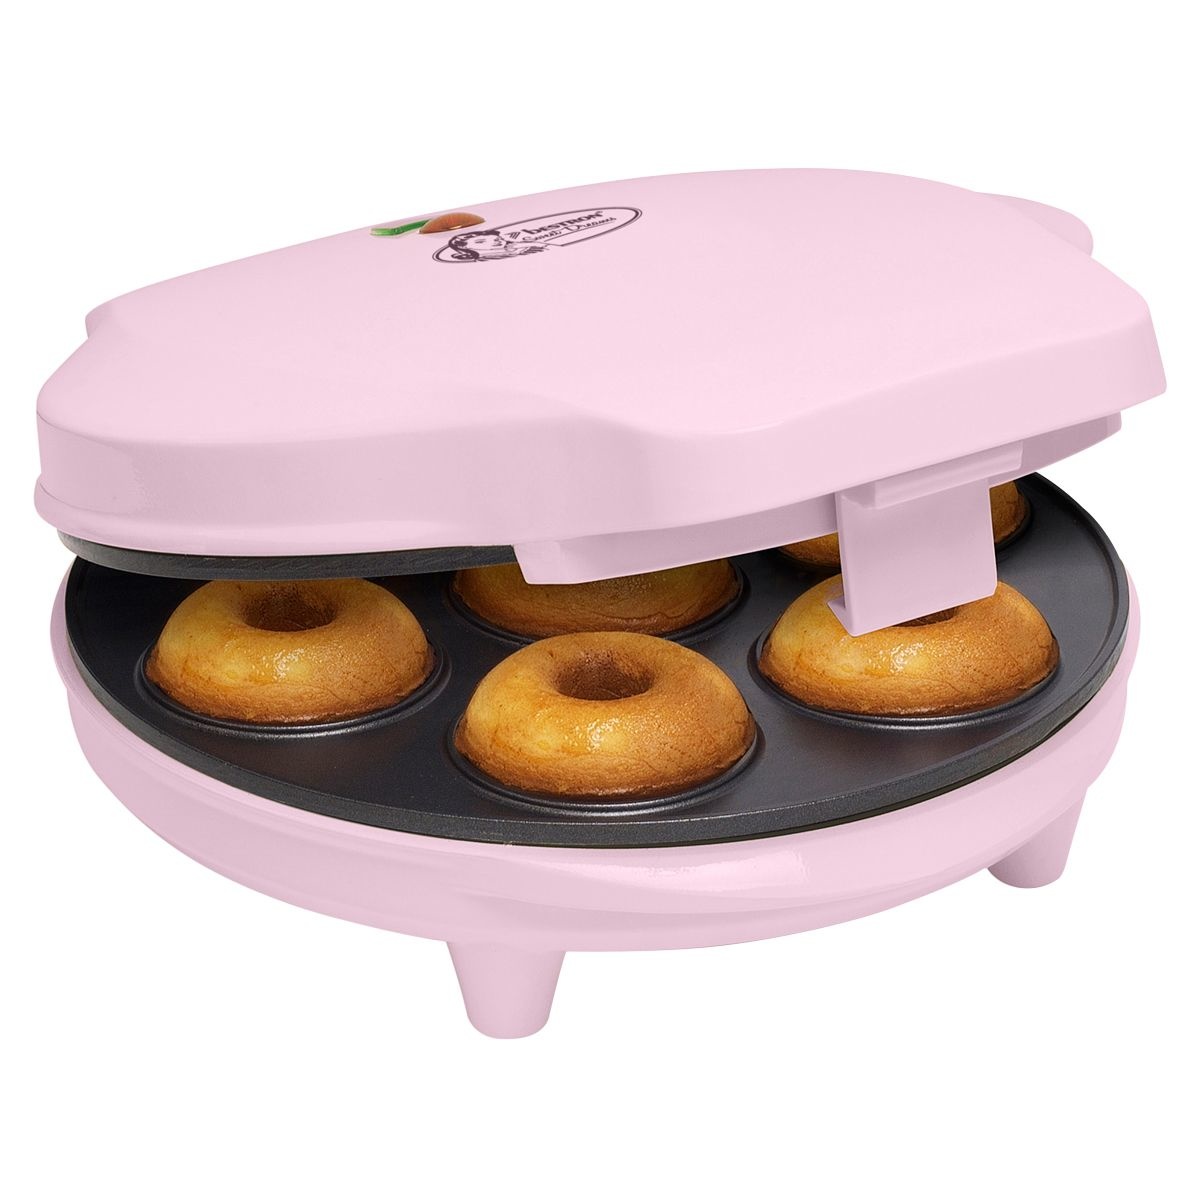 ondernemer in beroep gaan Gouverneur Bestron Donut Maker Roze kopen? - PGAromaWinkel